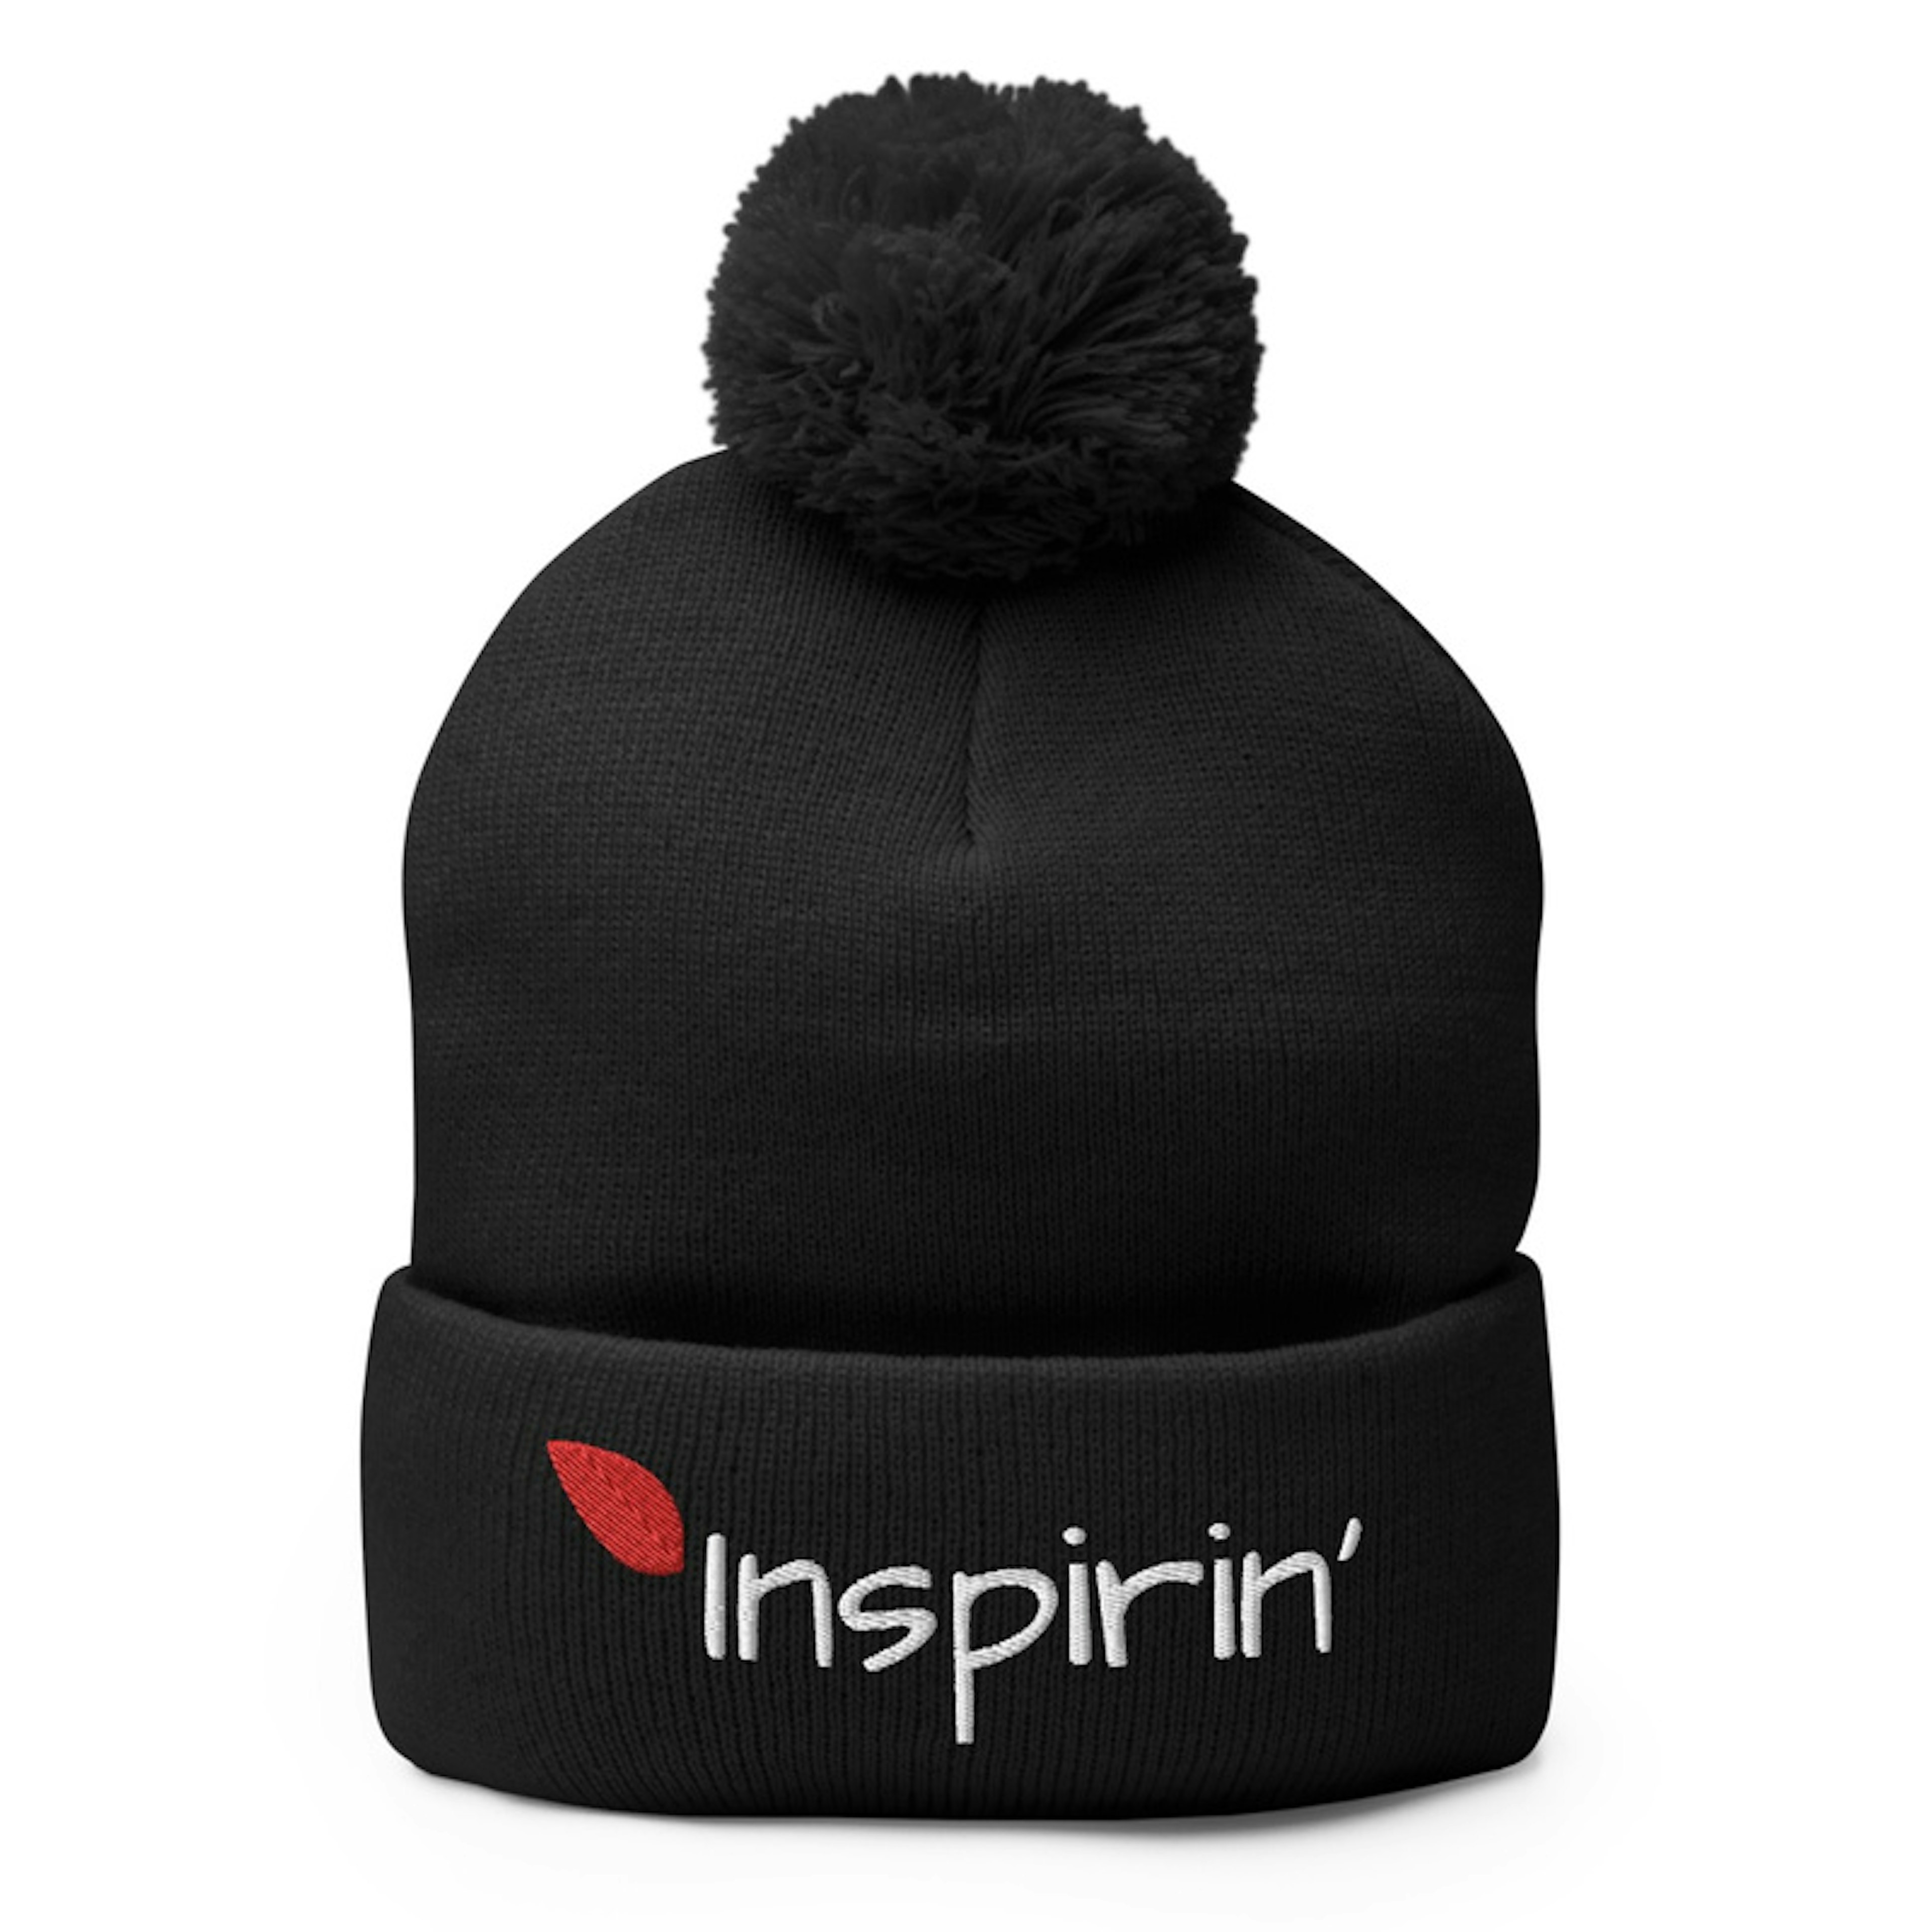 Inspirin' winter hat